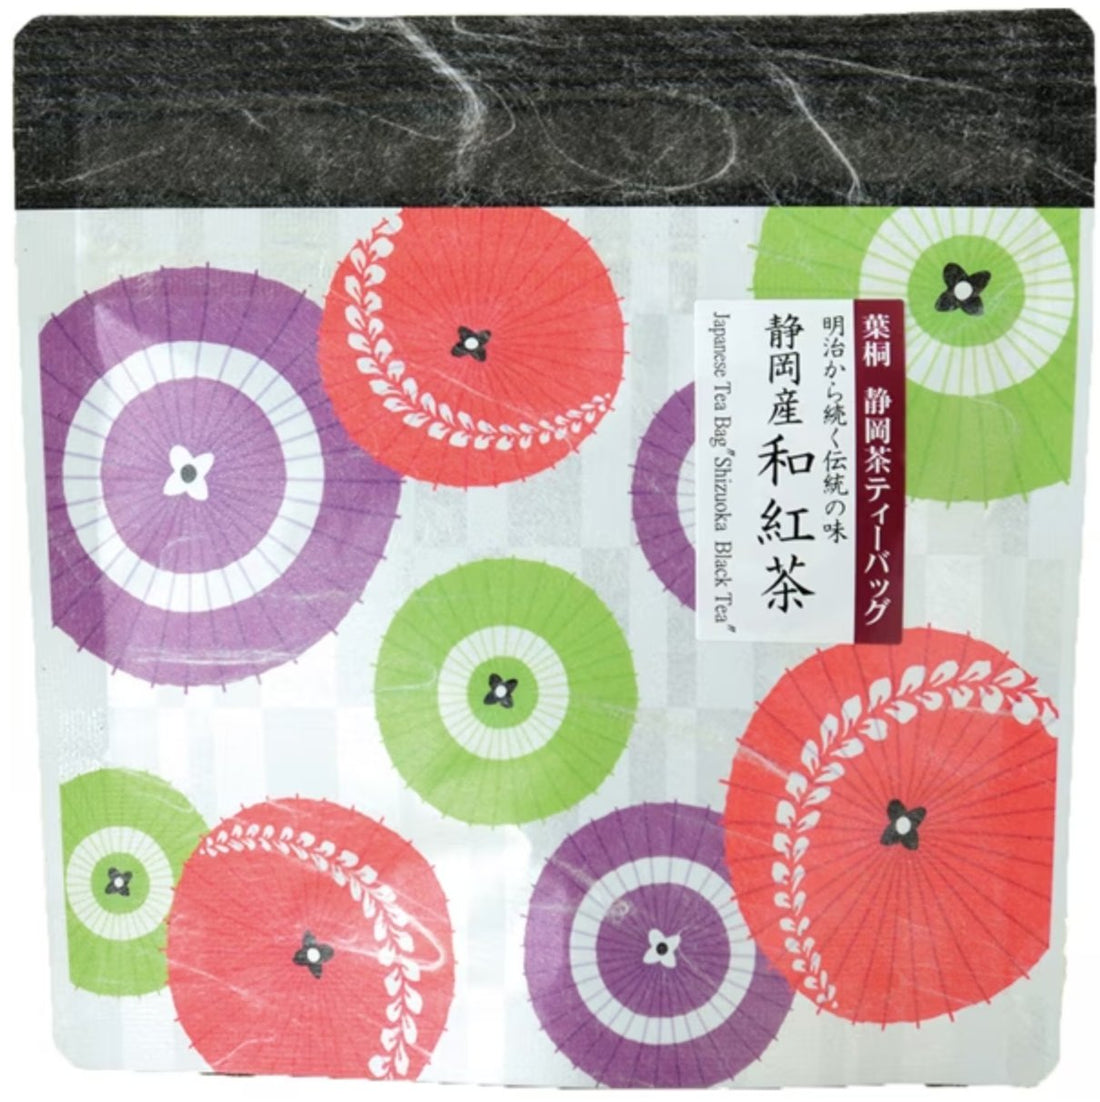 Hagiri Wa Chuck Shizuoka Japanese Black Tea Tea Bags 2g x 6 pieces - NihonMura